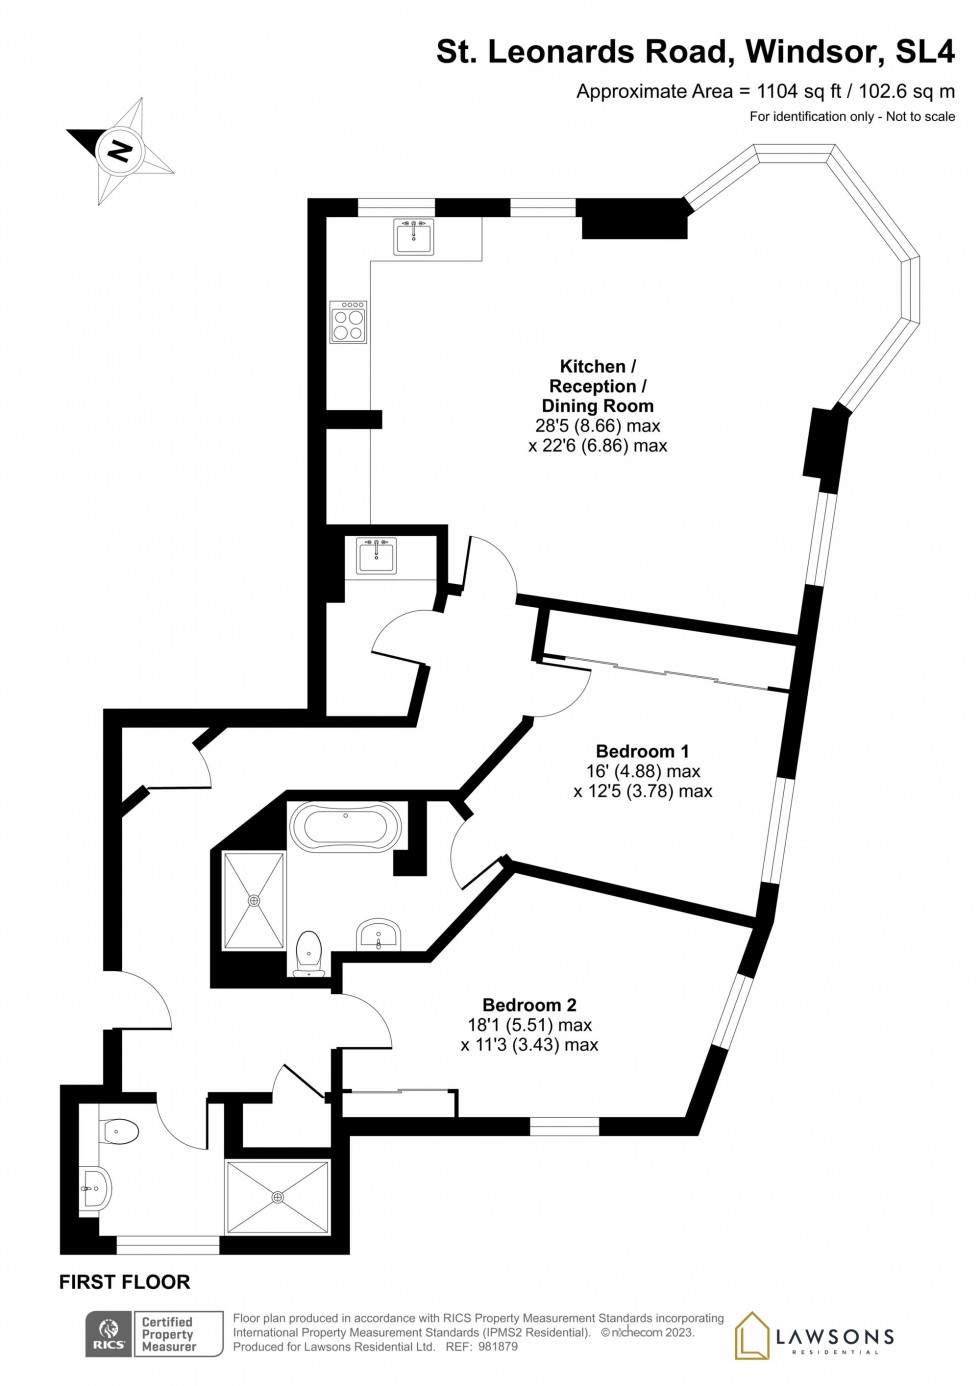 Floorplan for St. Leonards Road, St. Leonards House, SL4